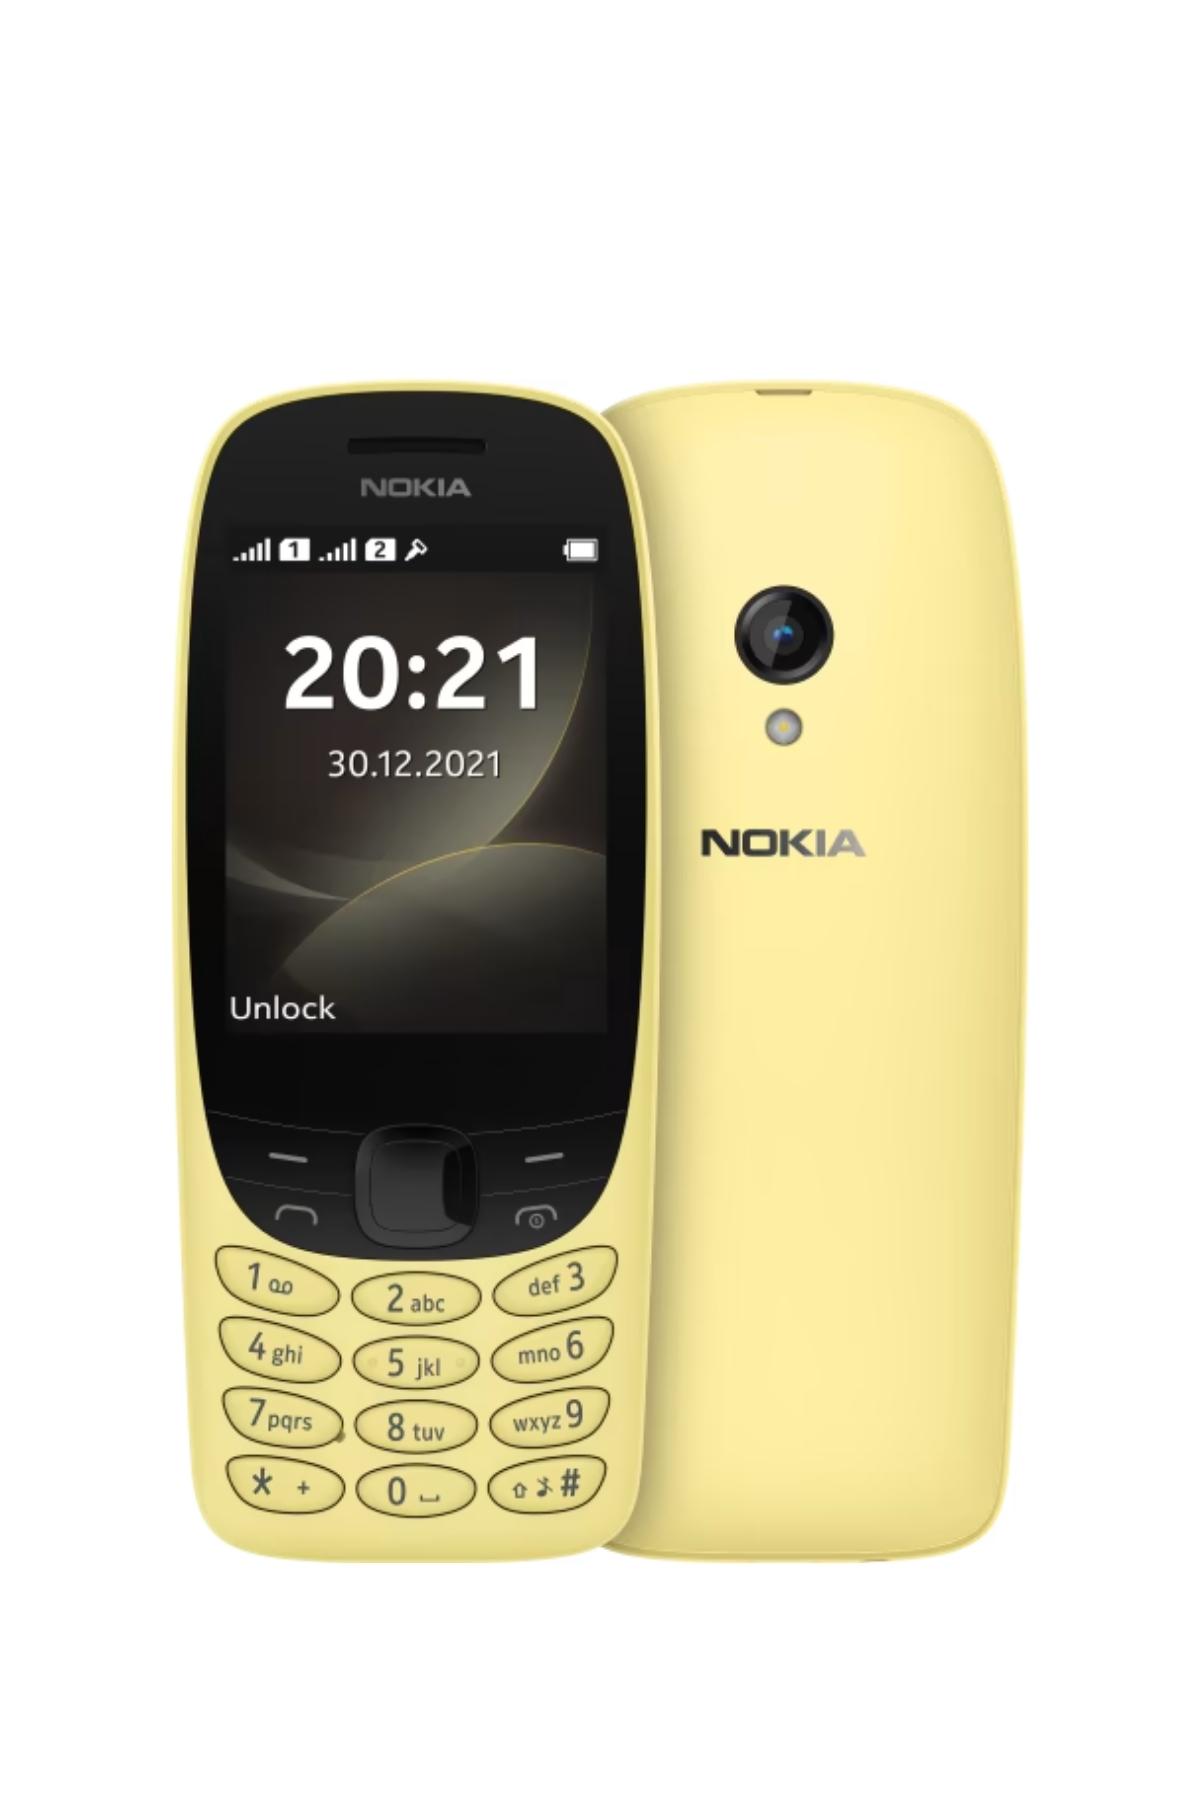 Nokia Mobil N6310 İki SIM'li 